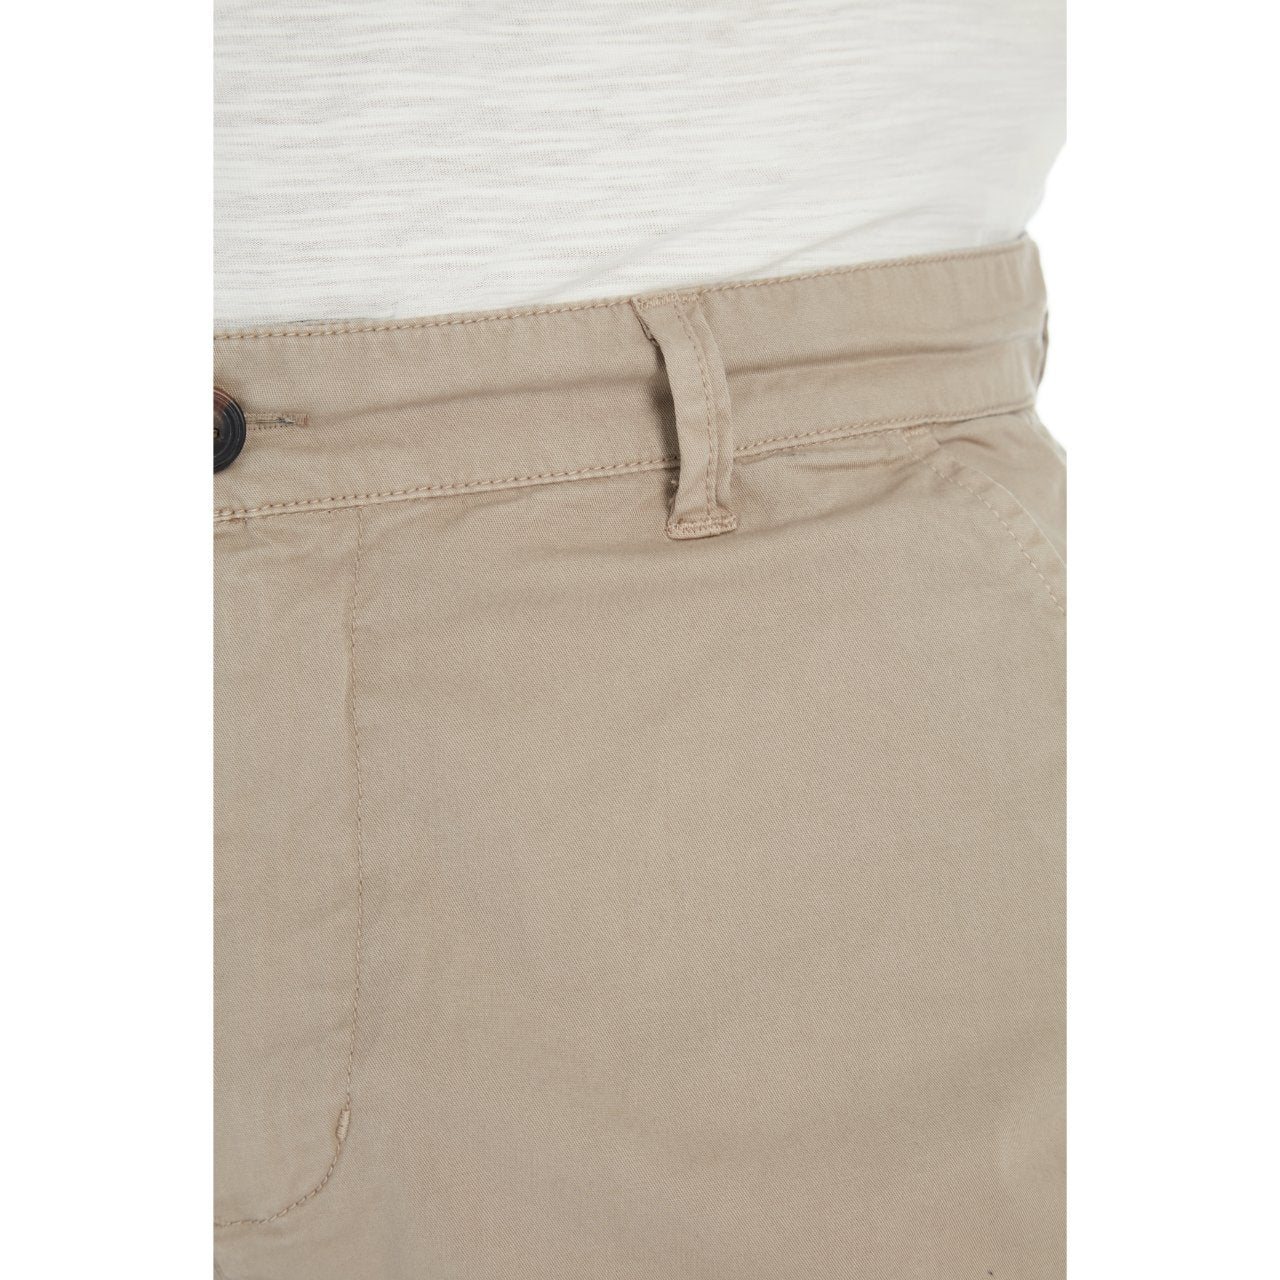 Men's Adan Twill Short by PX Clothing - Men - Apparel - Shorts - Casual - Benn~Burry